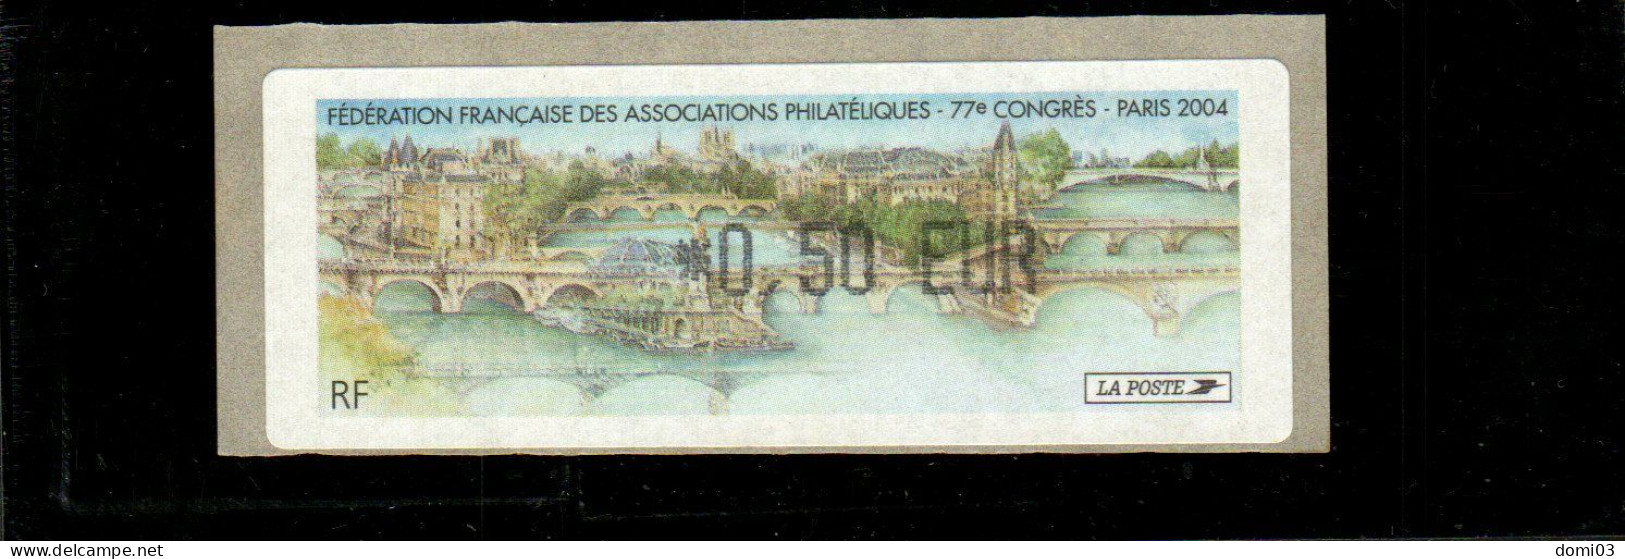 77è Congrès FFAP Paris 2004 - 1999-2009 Abgebildete Automatenmarke